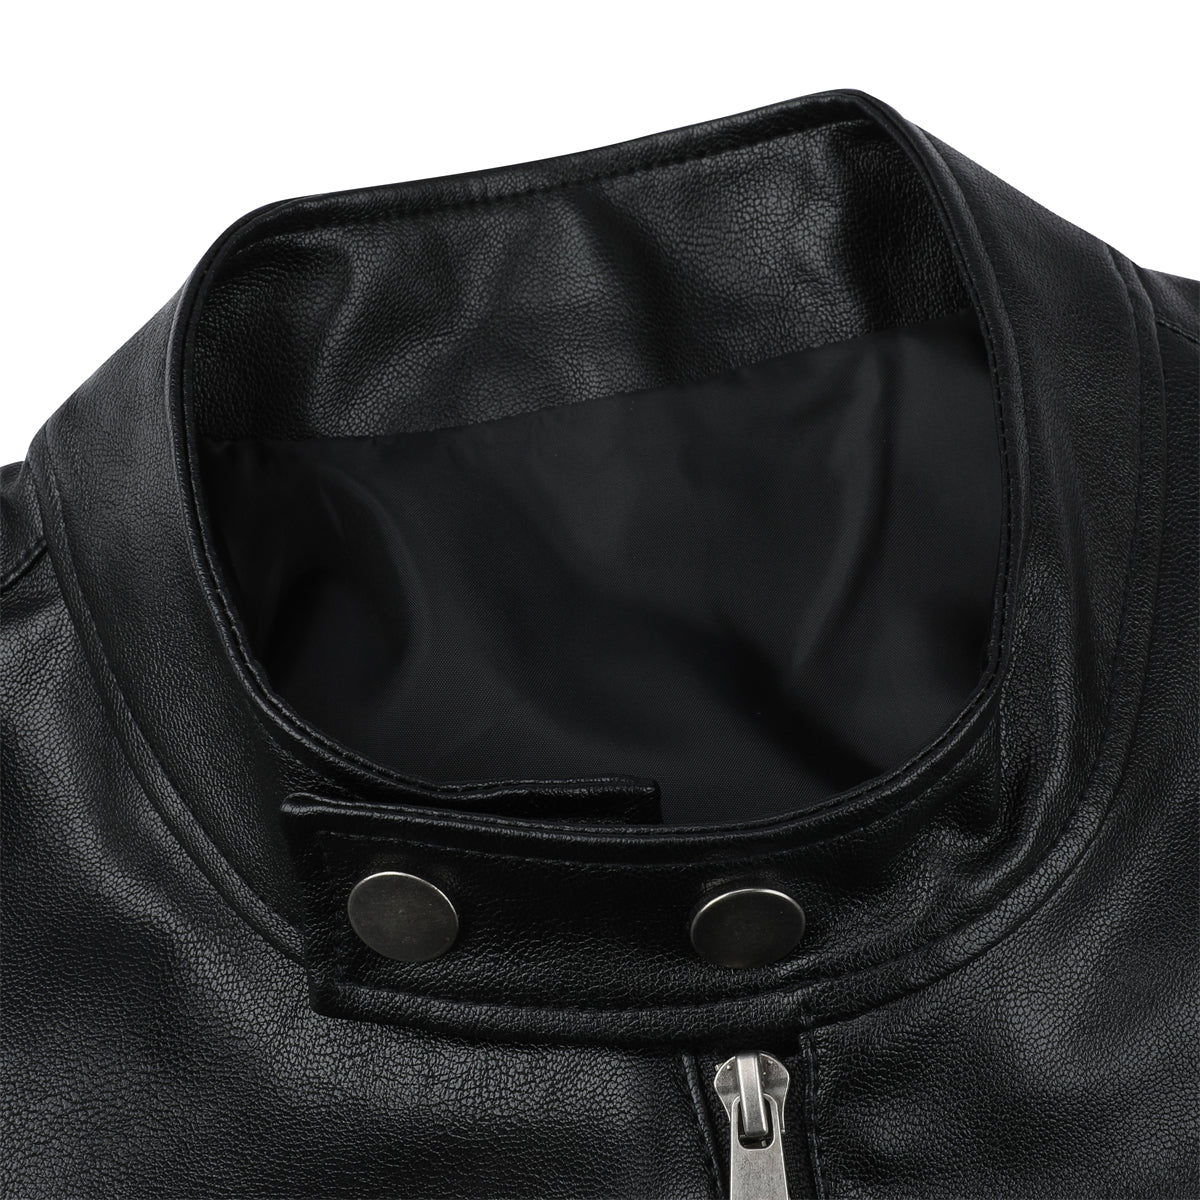 Men's Leather Jacket Casual Zip Up Motorcycle Outwear Black 2